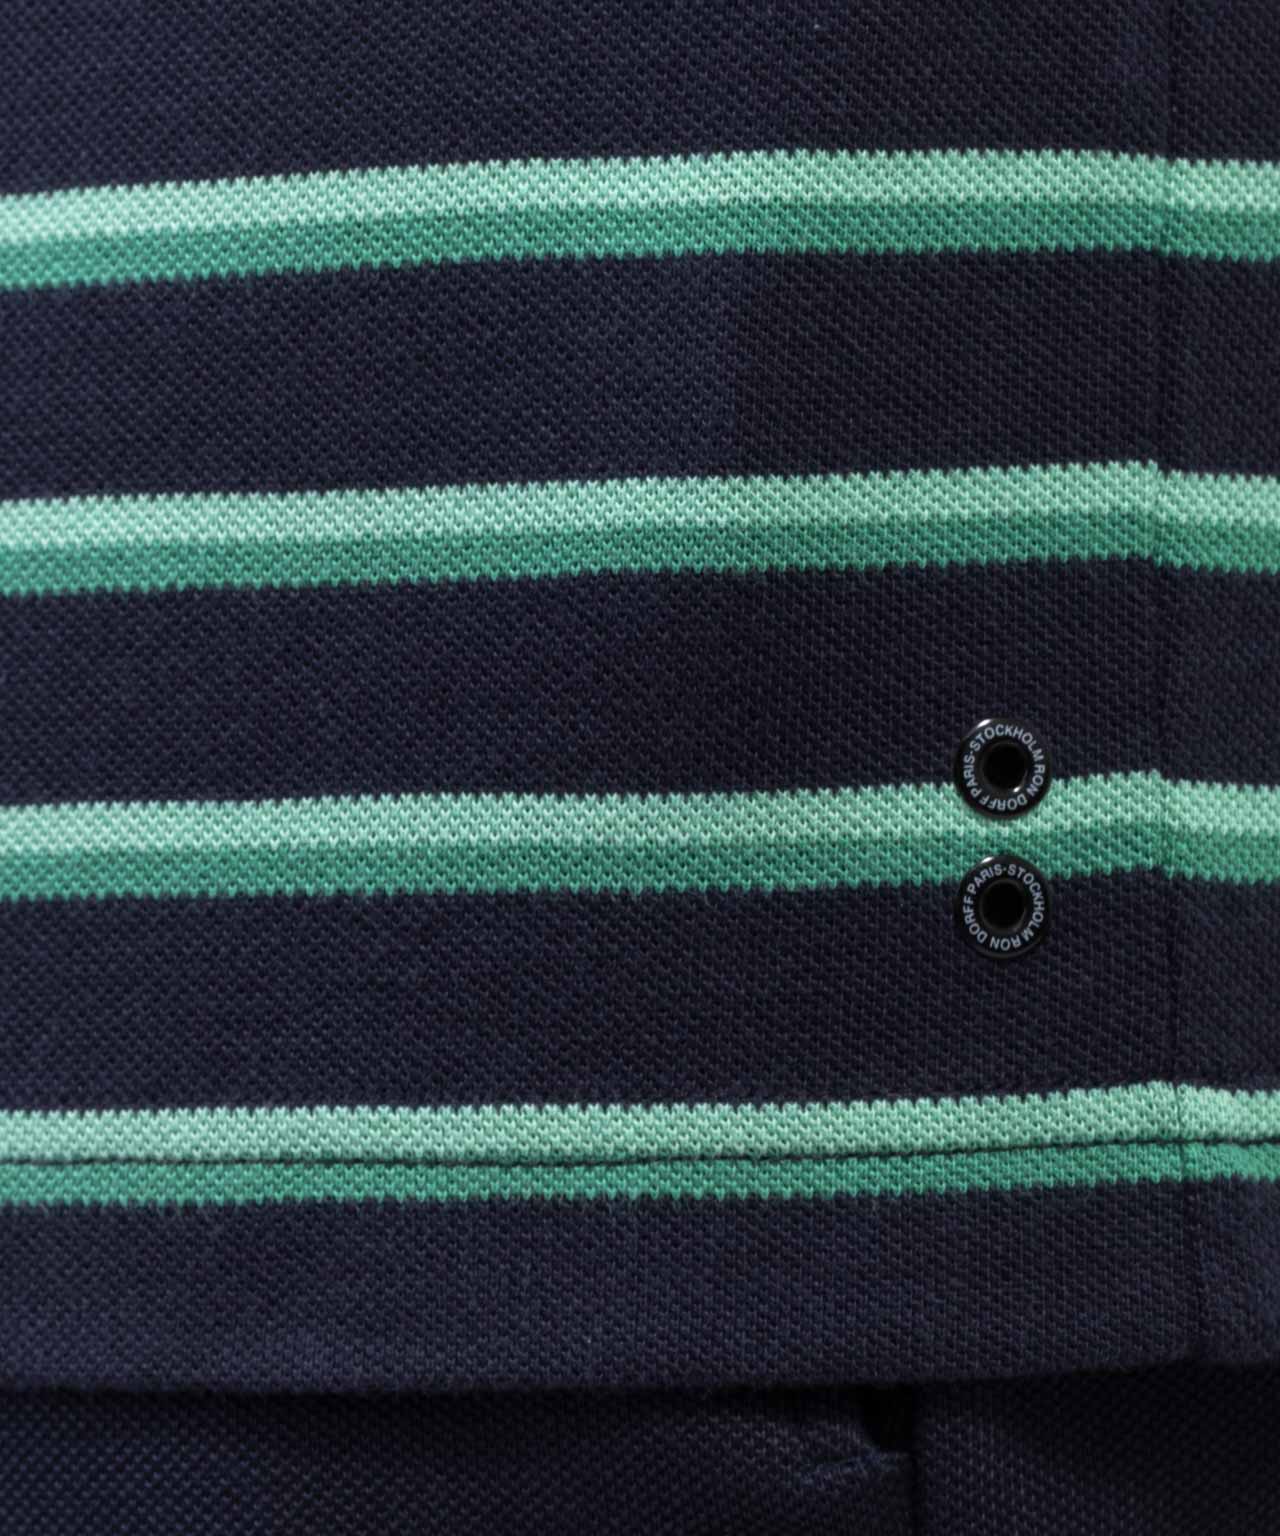 T-Shirt Piqué: Pistachio Green